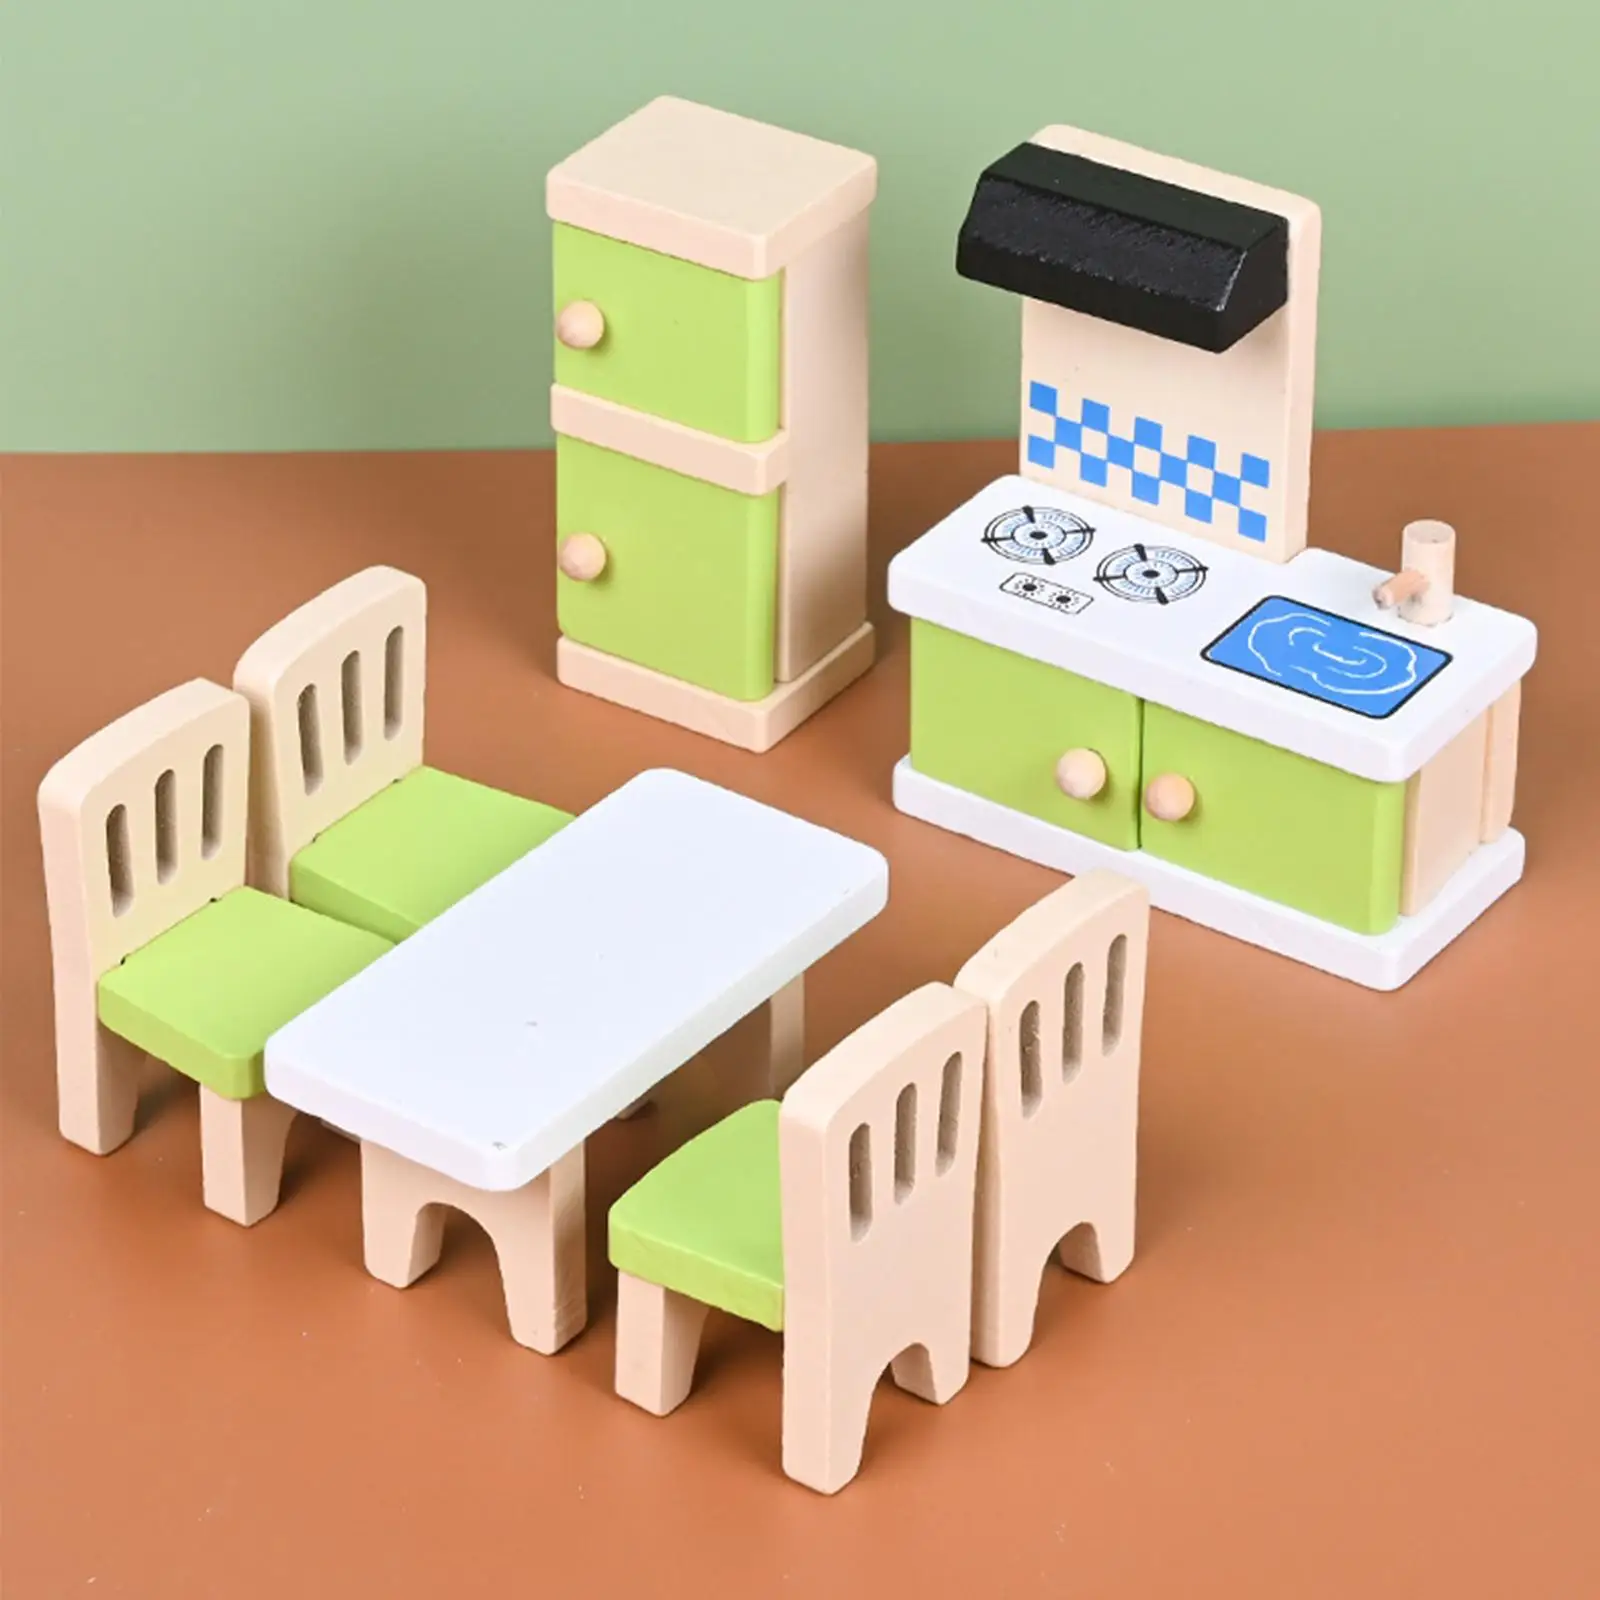 30x Dollhouse Wood Furniture Set Miniature Play Scene Model Pretend Play Furniture Toy Dollhouse Furniture Playset for Decor